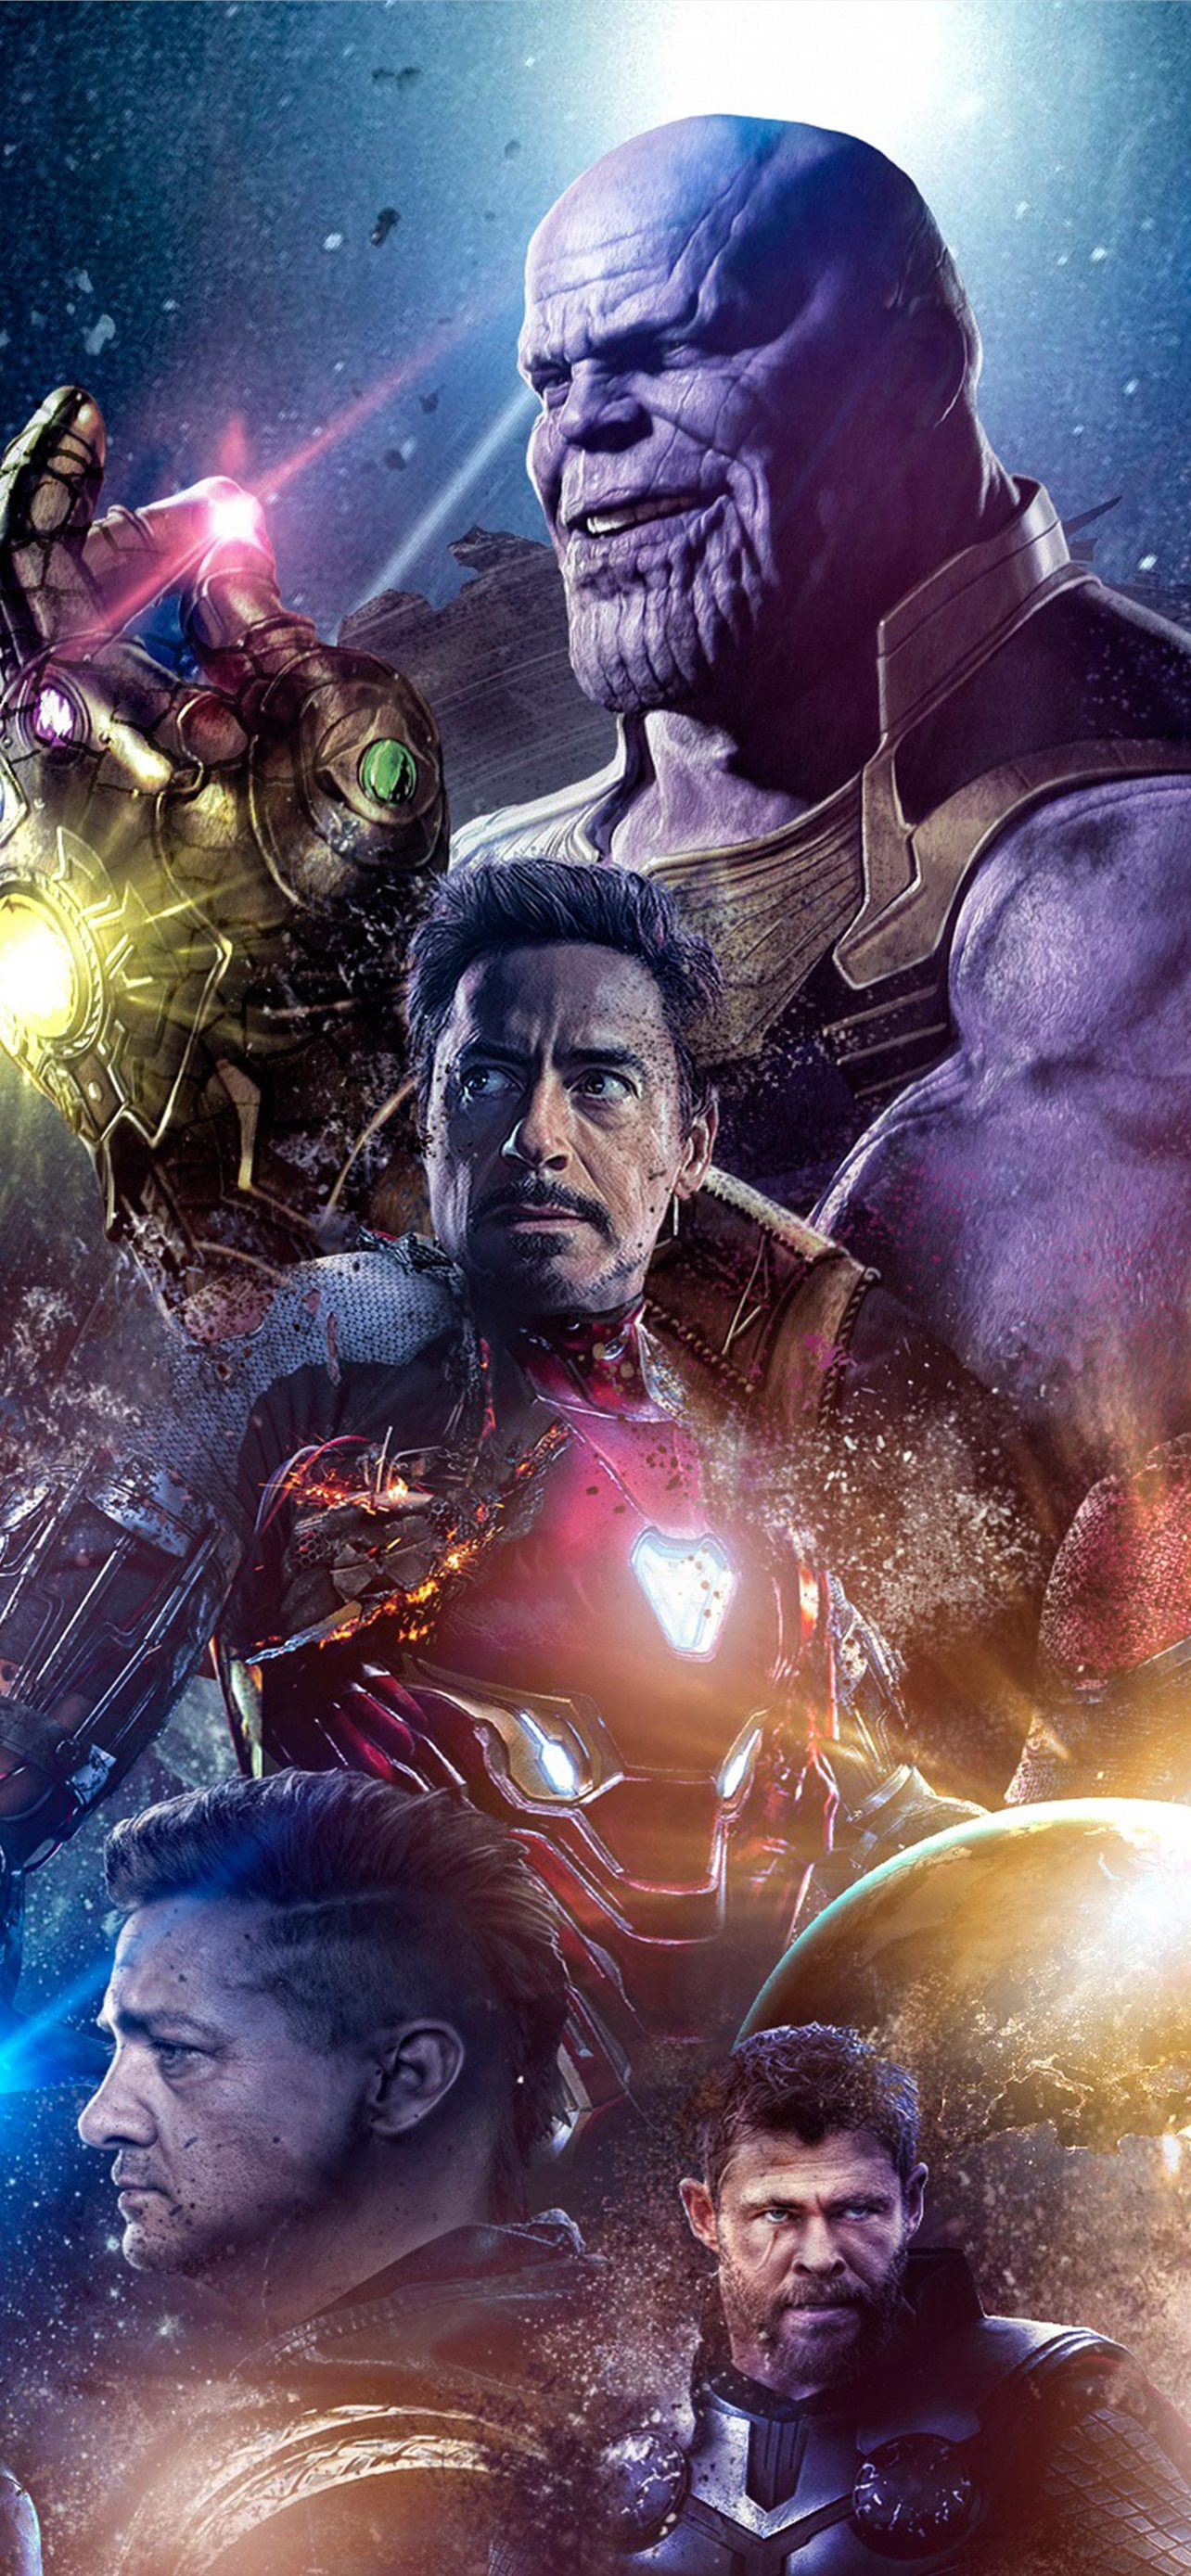 Thor Avengers Endgame Movie iPhone Wallpaper